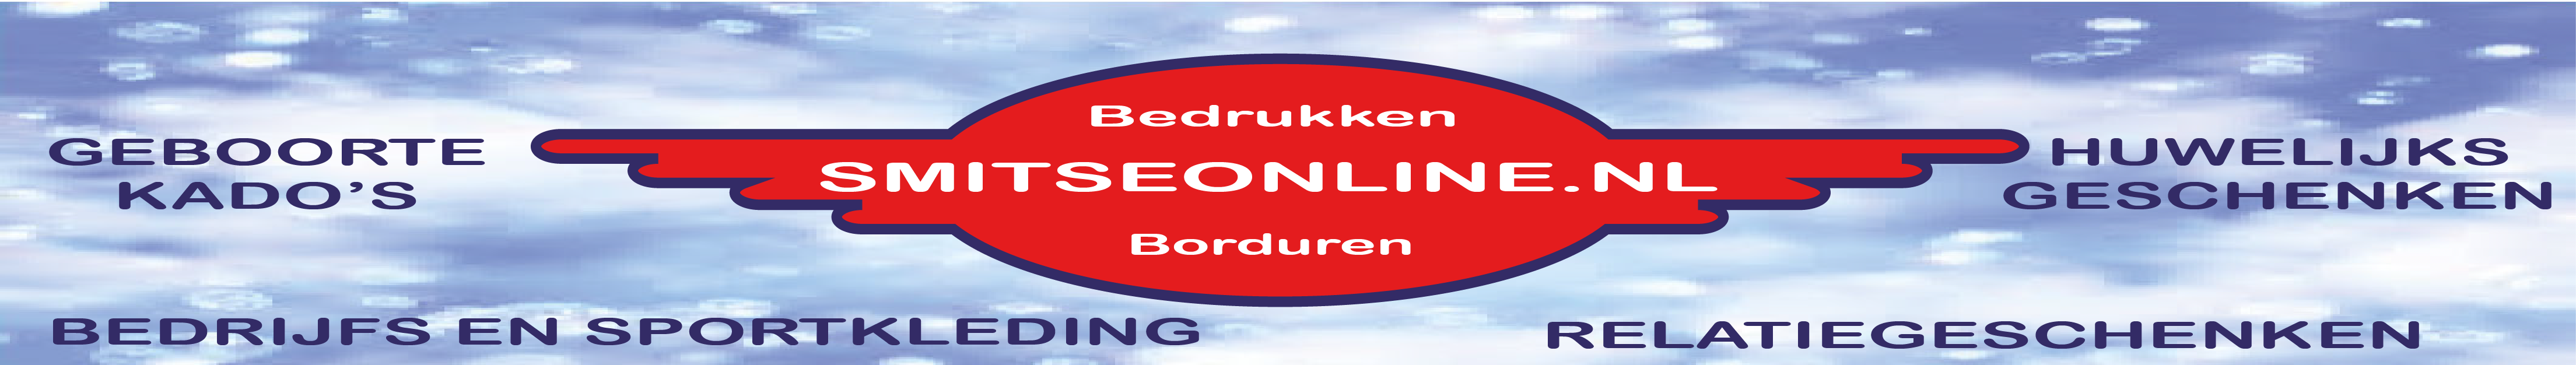 Bedrukken - Borduren - Bedrijfskleding - Sportkleding - Autogordelhoezen - Naamkado -  Friesland